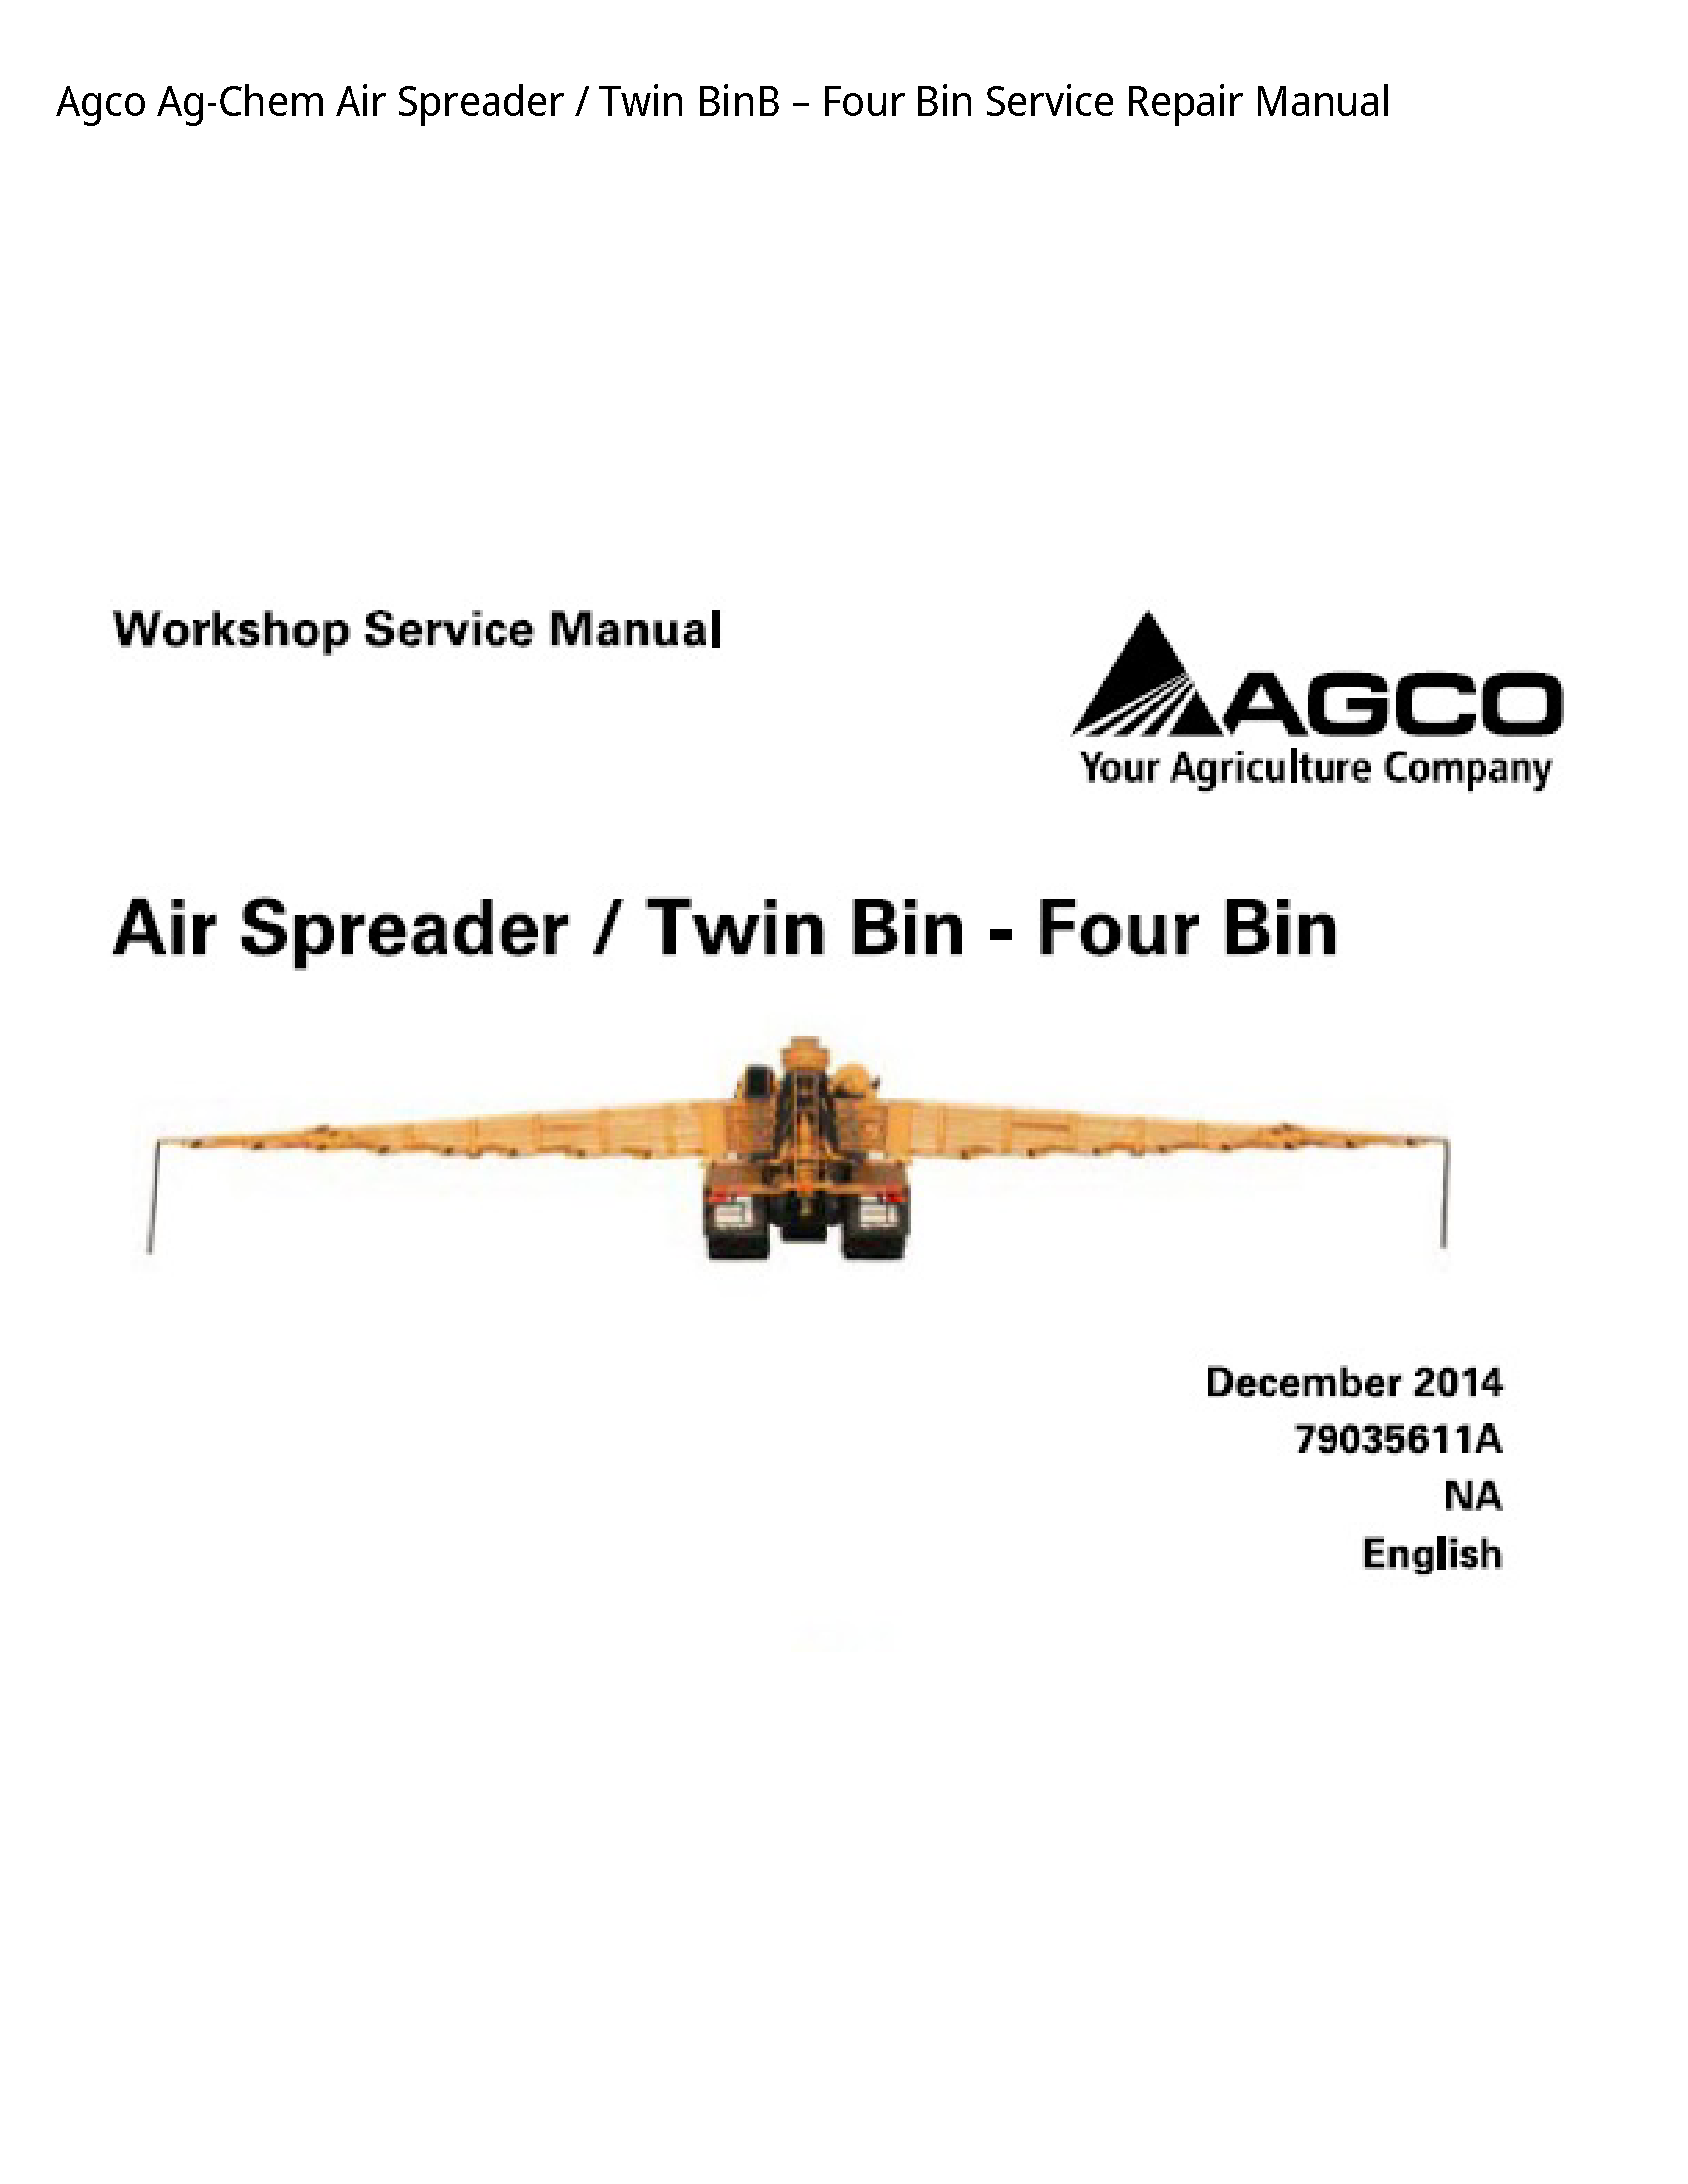 AGCO Ag-Chem Air Spreader Twin BinВ Four Bin manual